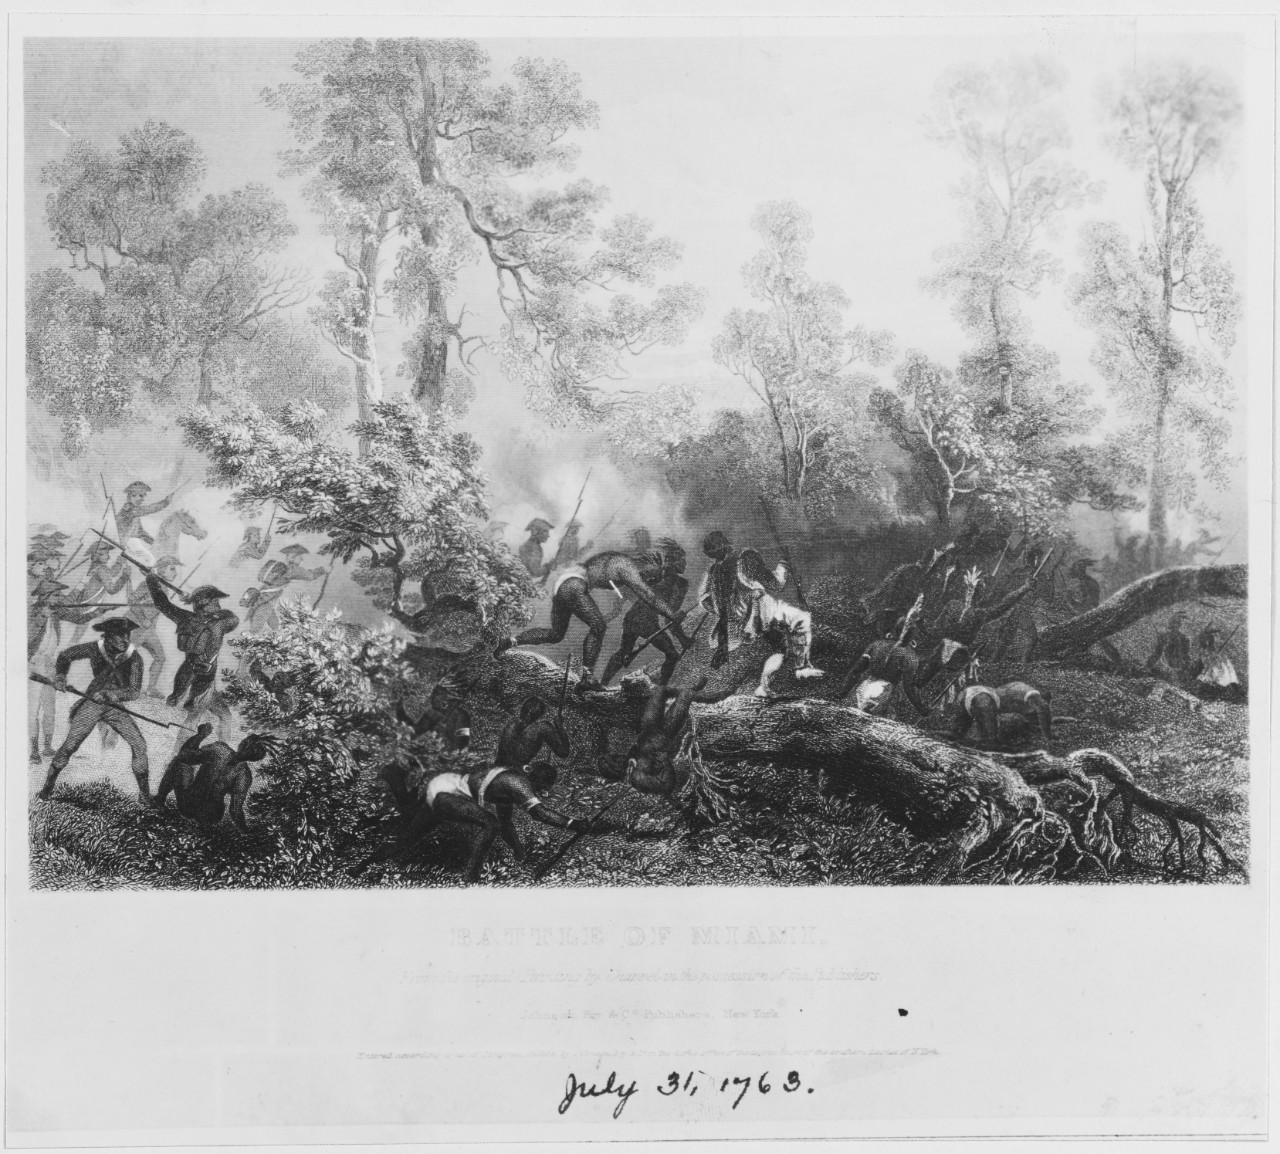 Battle of Miami, July 31, 1763